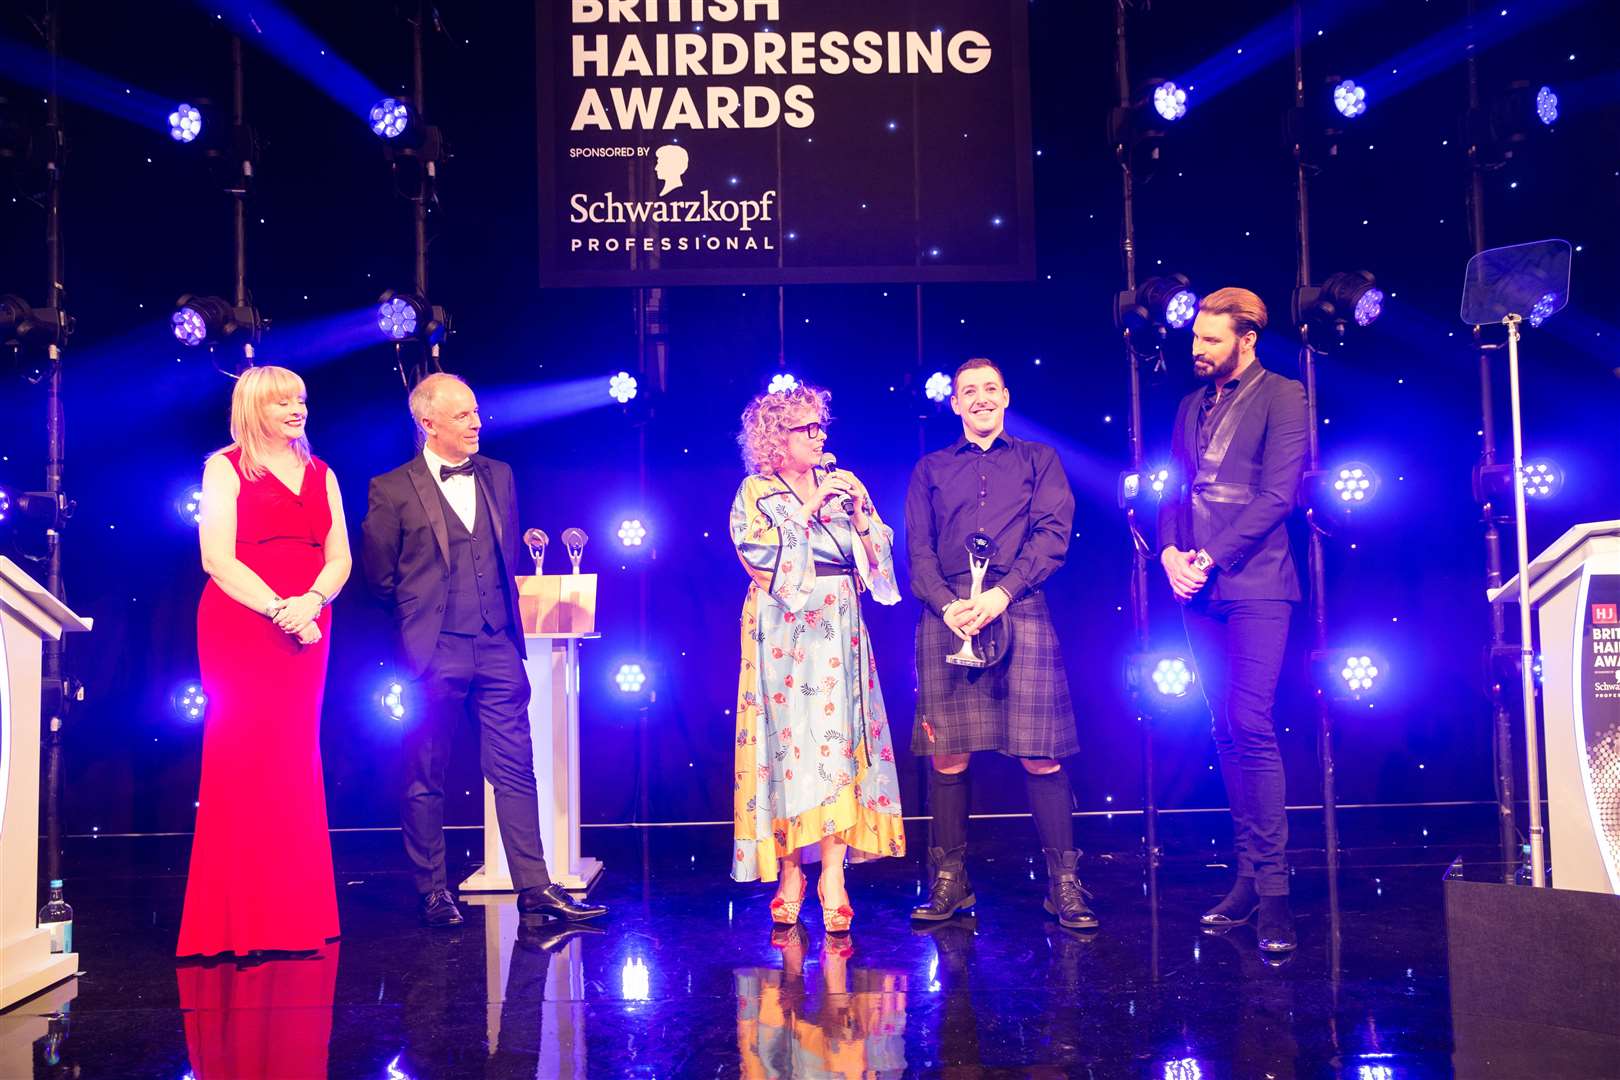 Representatives of Ego Hair Design alongside Rylan Clark won one of the company's three British Hairdressing Awards.